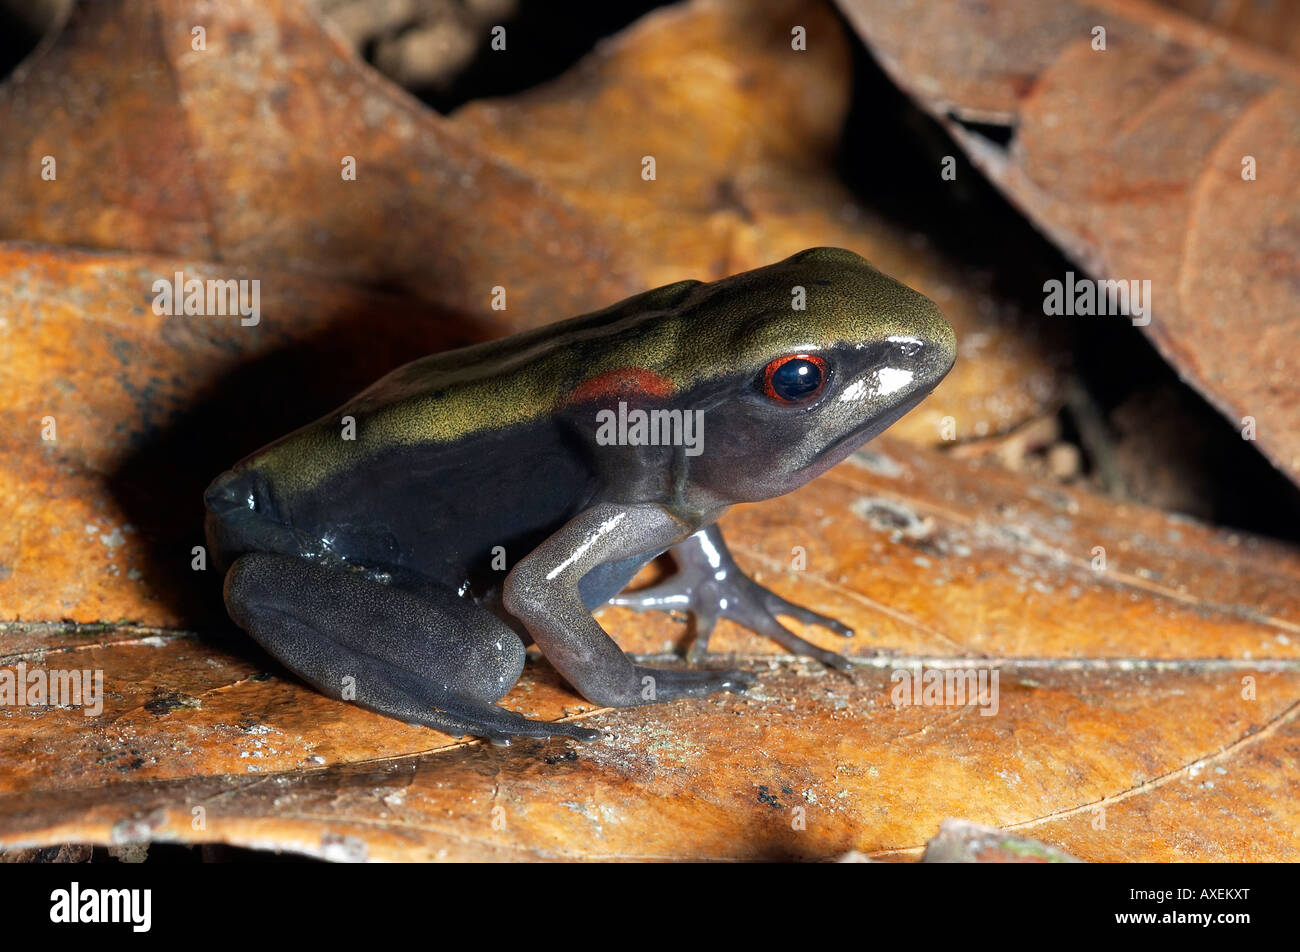 AMPHIBIAN, FROG. Unidentified frog with red eye. Photographed in Agumbe, Karnataka, INDIA. Stock Photo